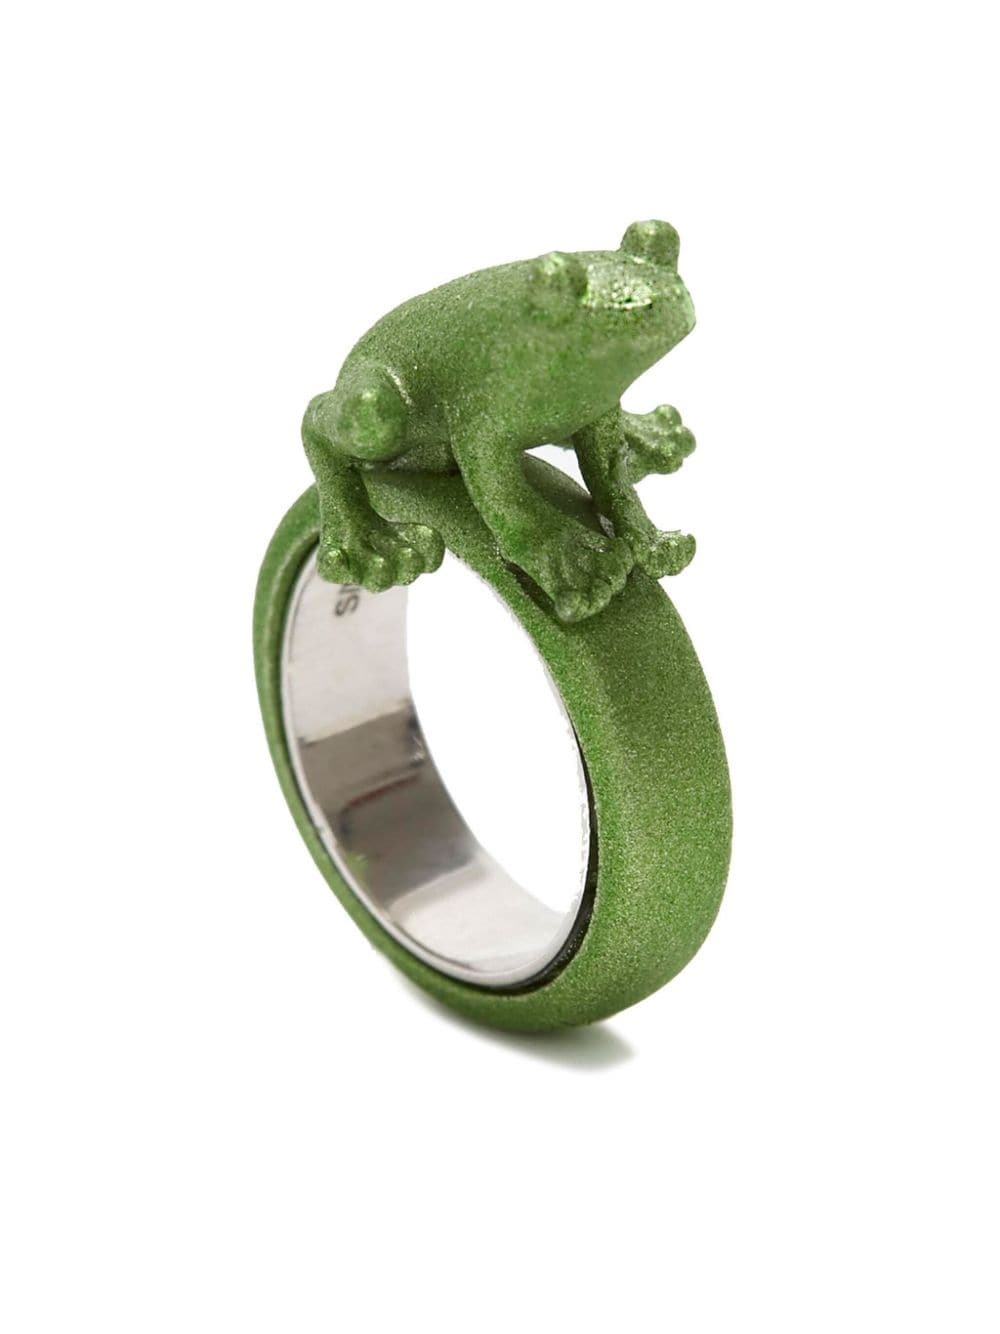 Frog textured-finish ring - 2